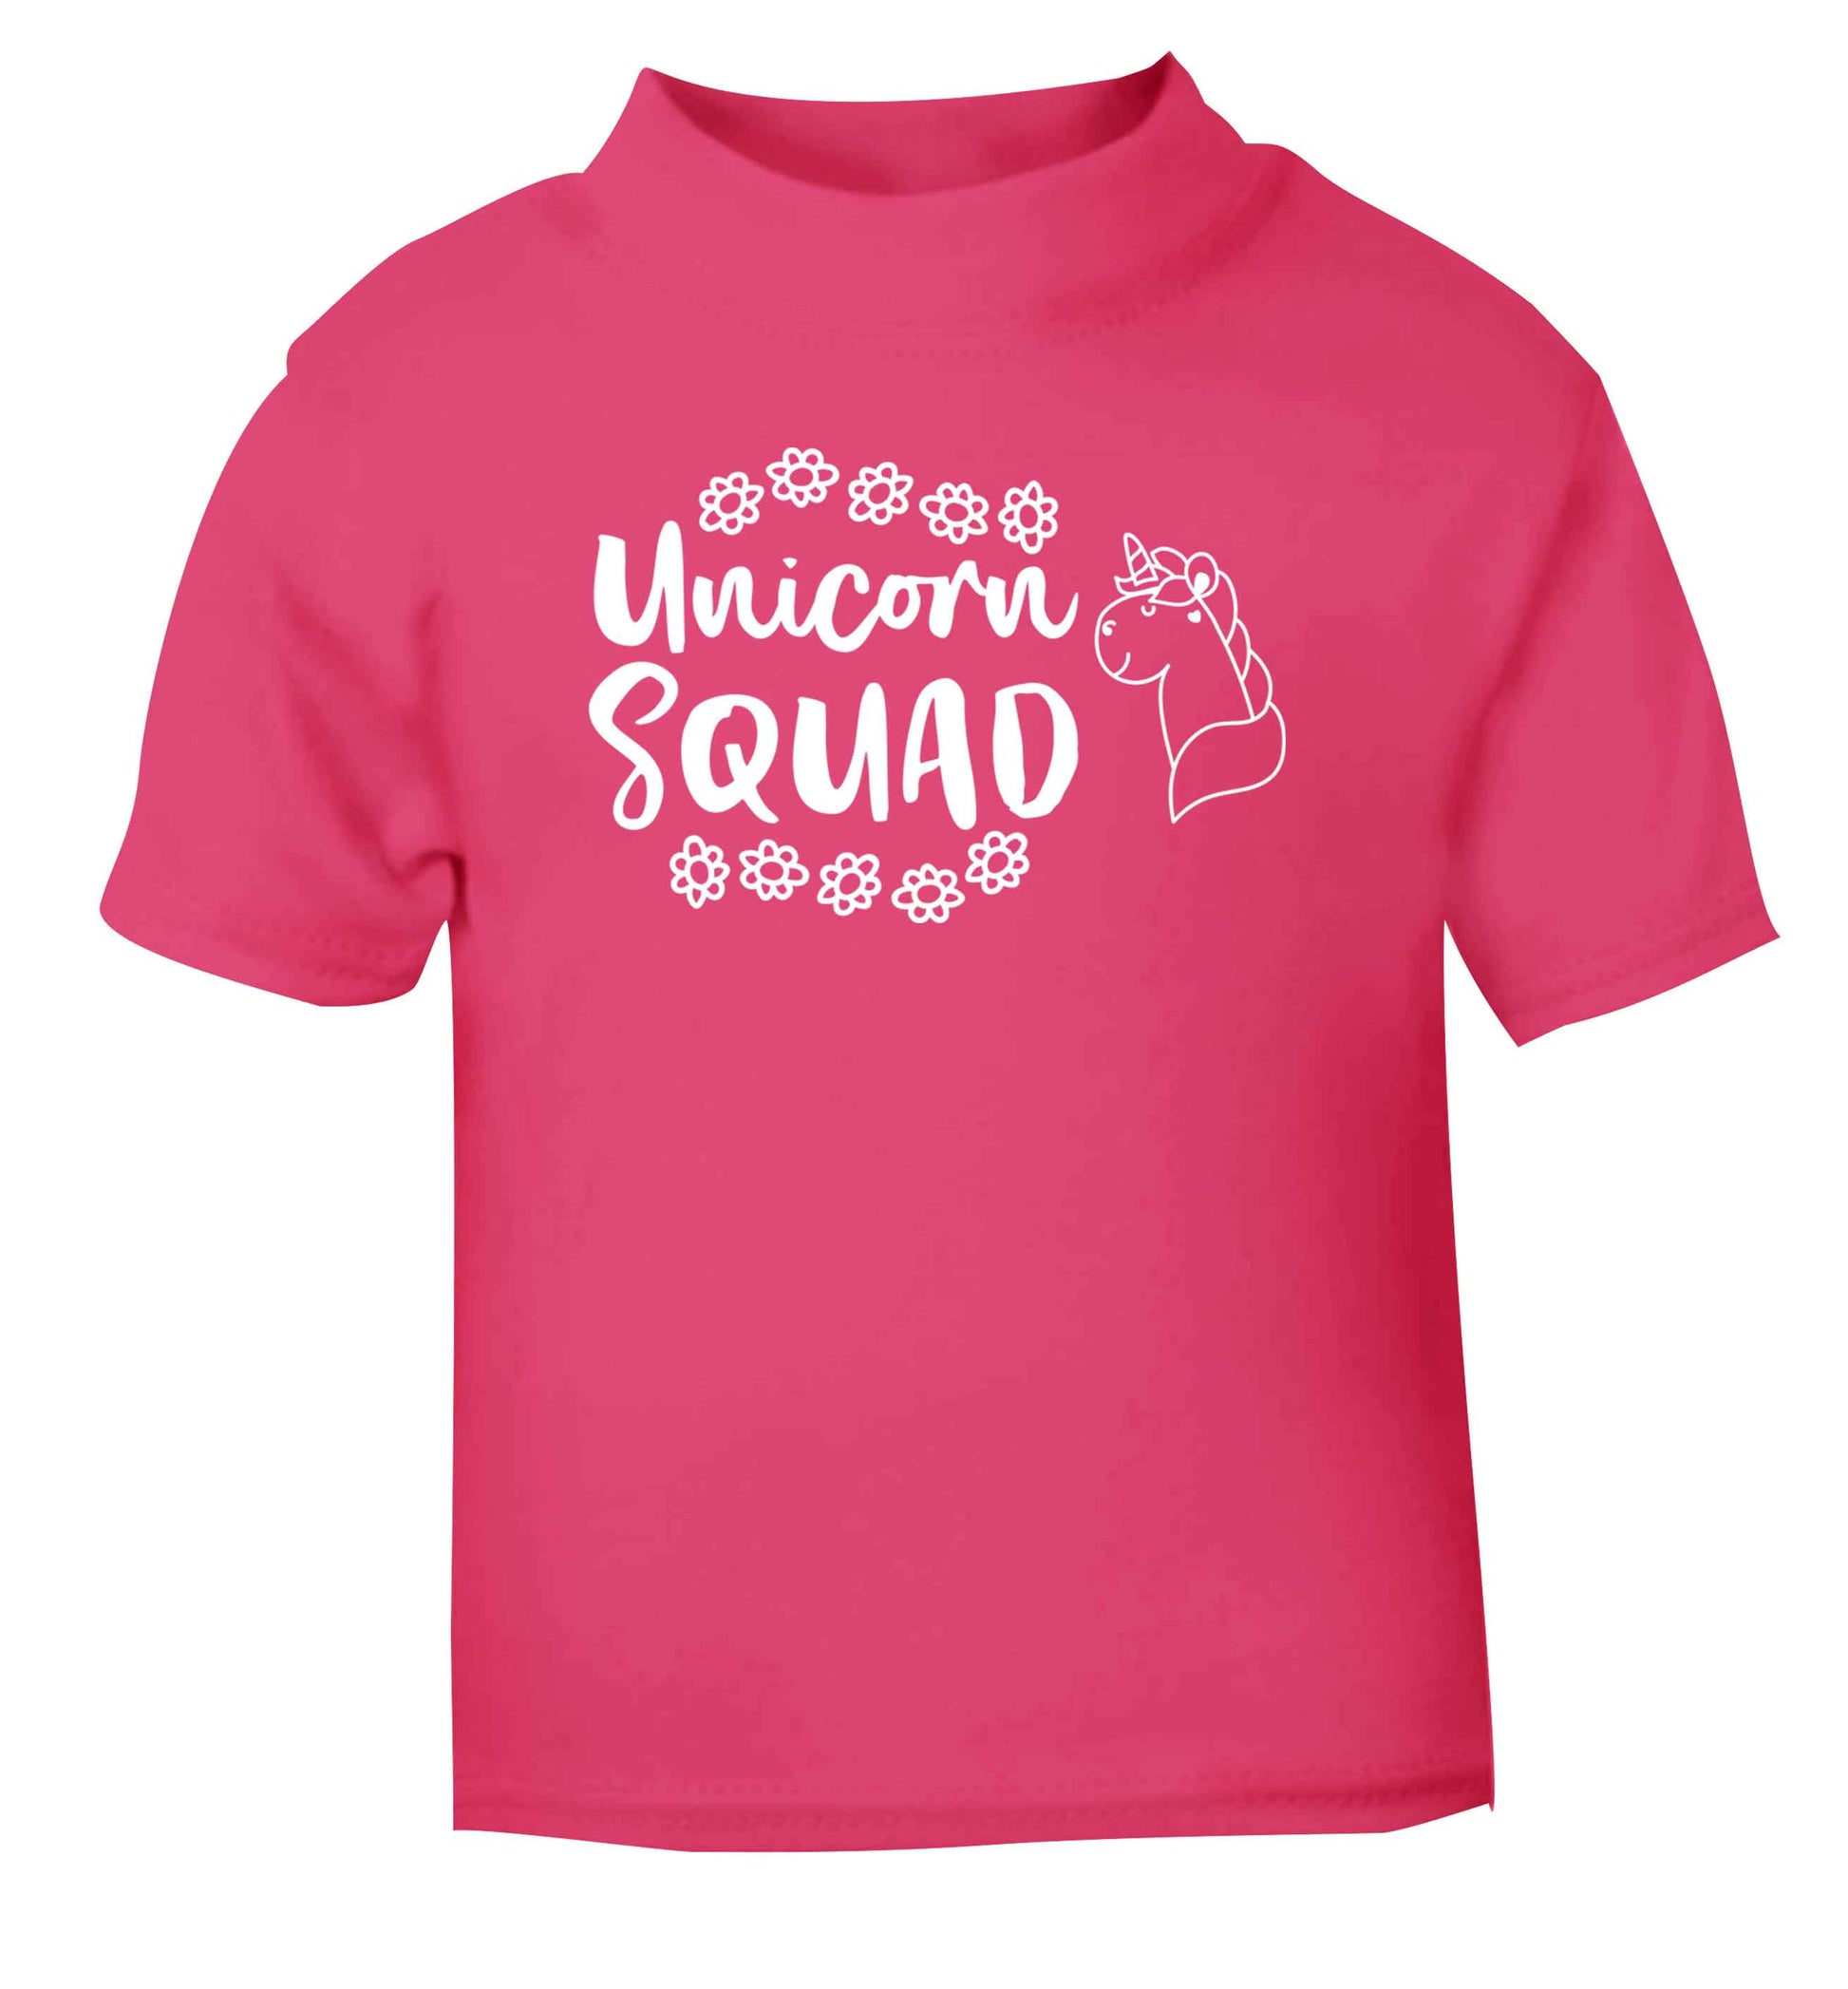 Unicorn Squad pink Baby Toddler Tshirt 2 Years